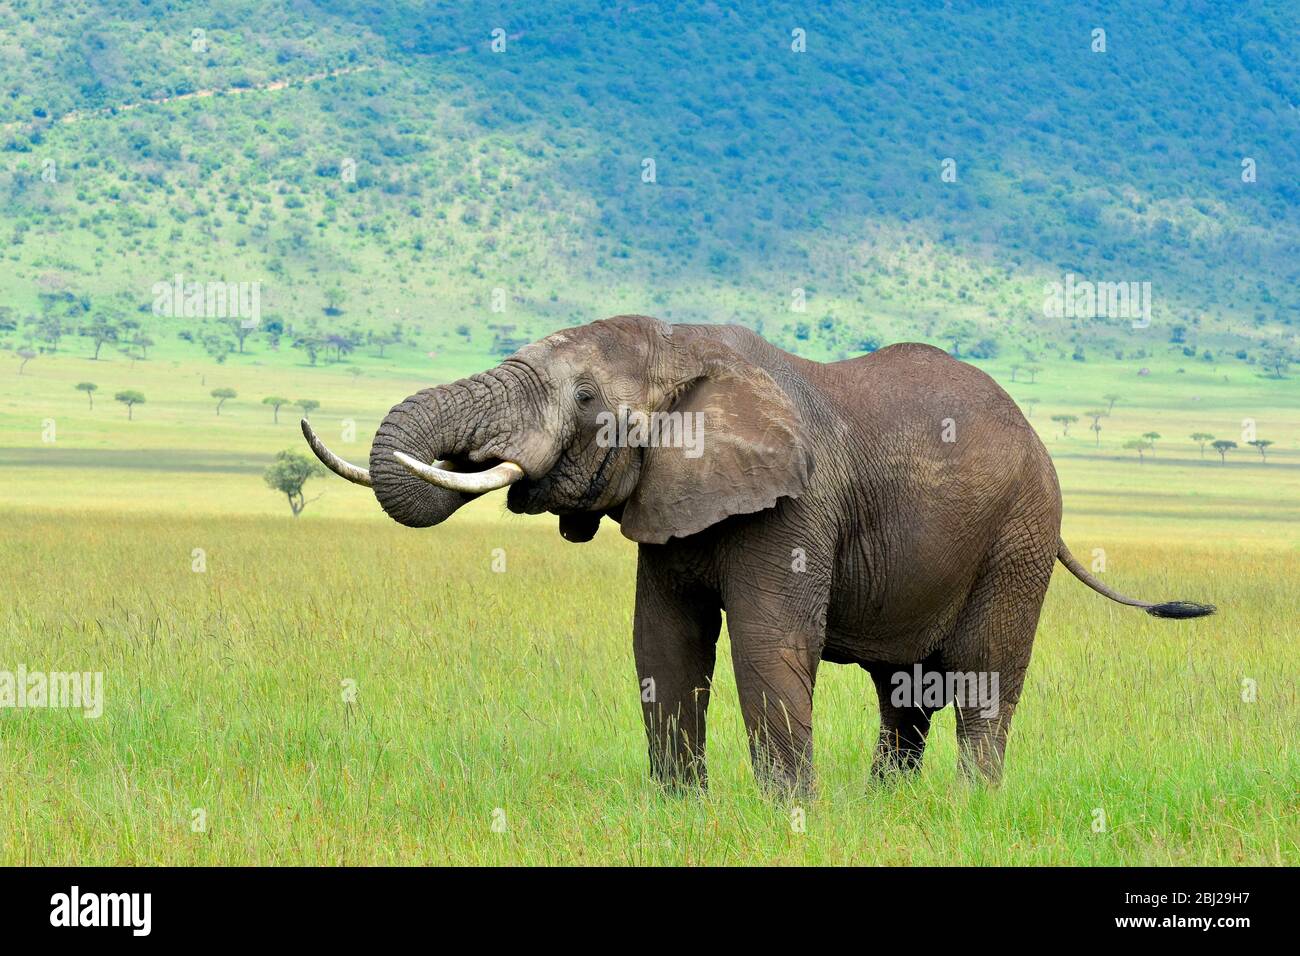 African elephants in Mara Triangle with Sirian escarpment in background, Kenya Stock Photo